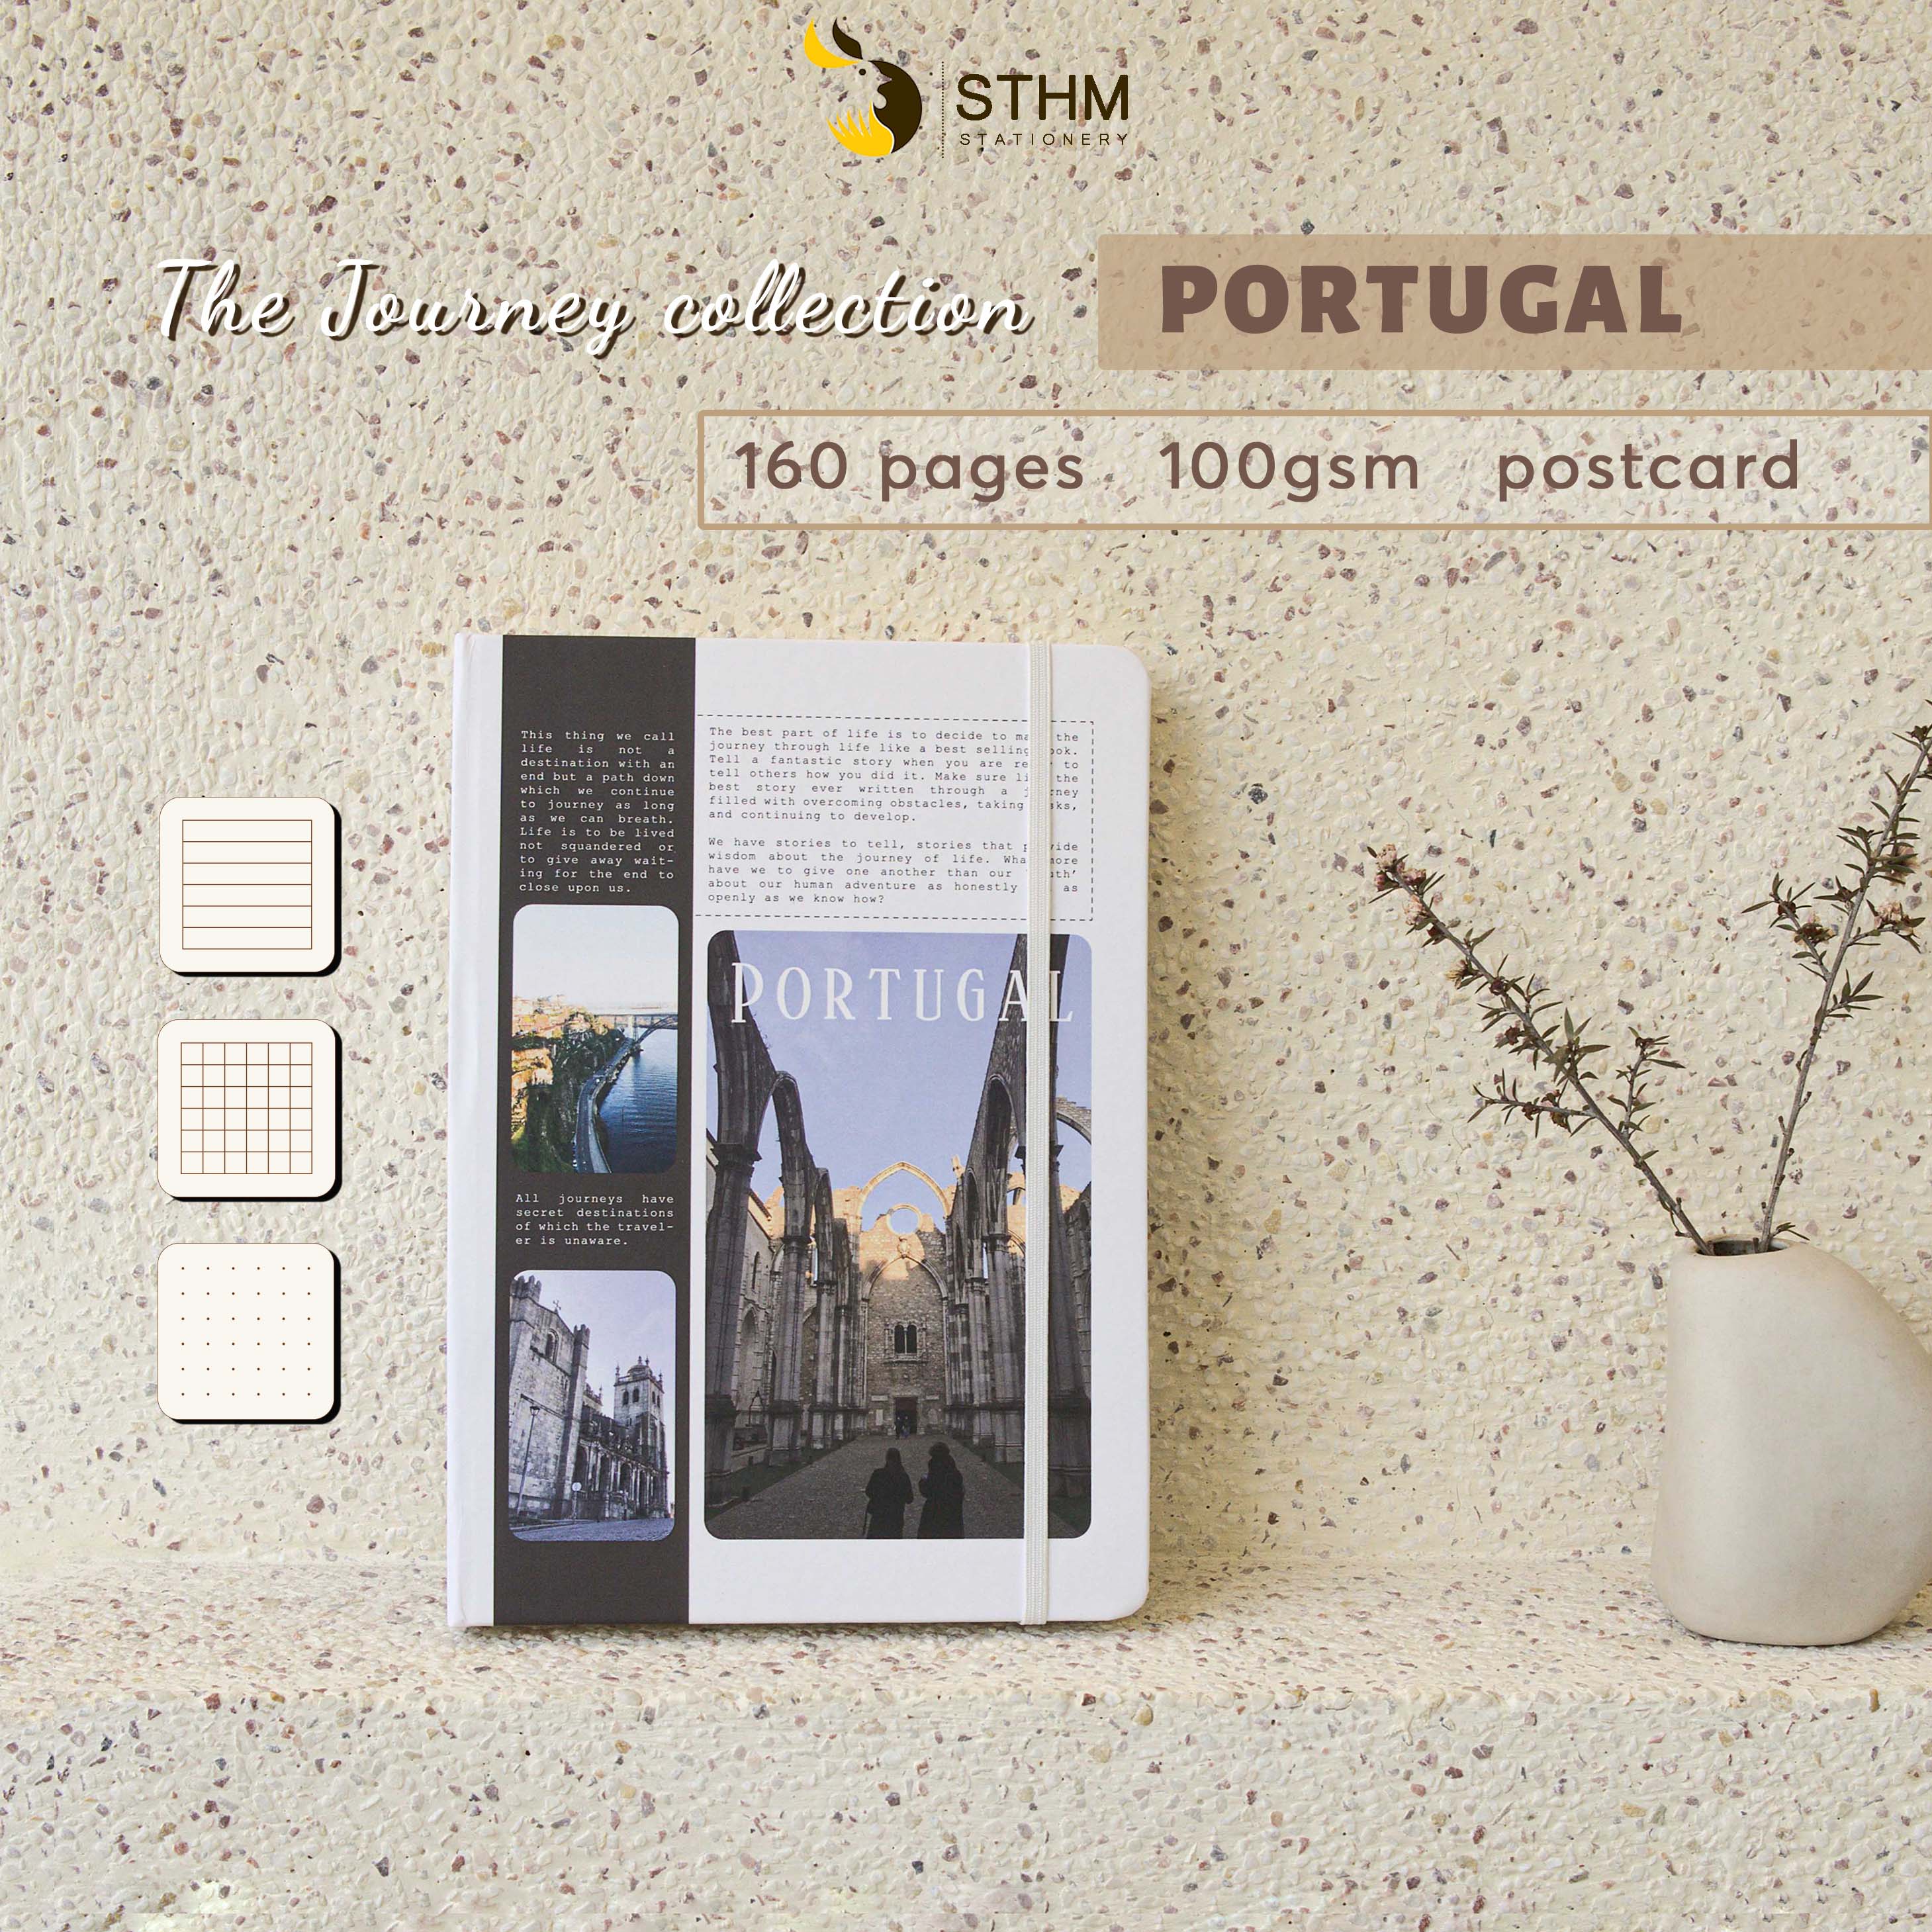 [STHM stationery] - The Journey notebook - EU collection - Sổ tay bìa cứng - Ruột kem 100gsm